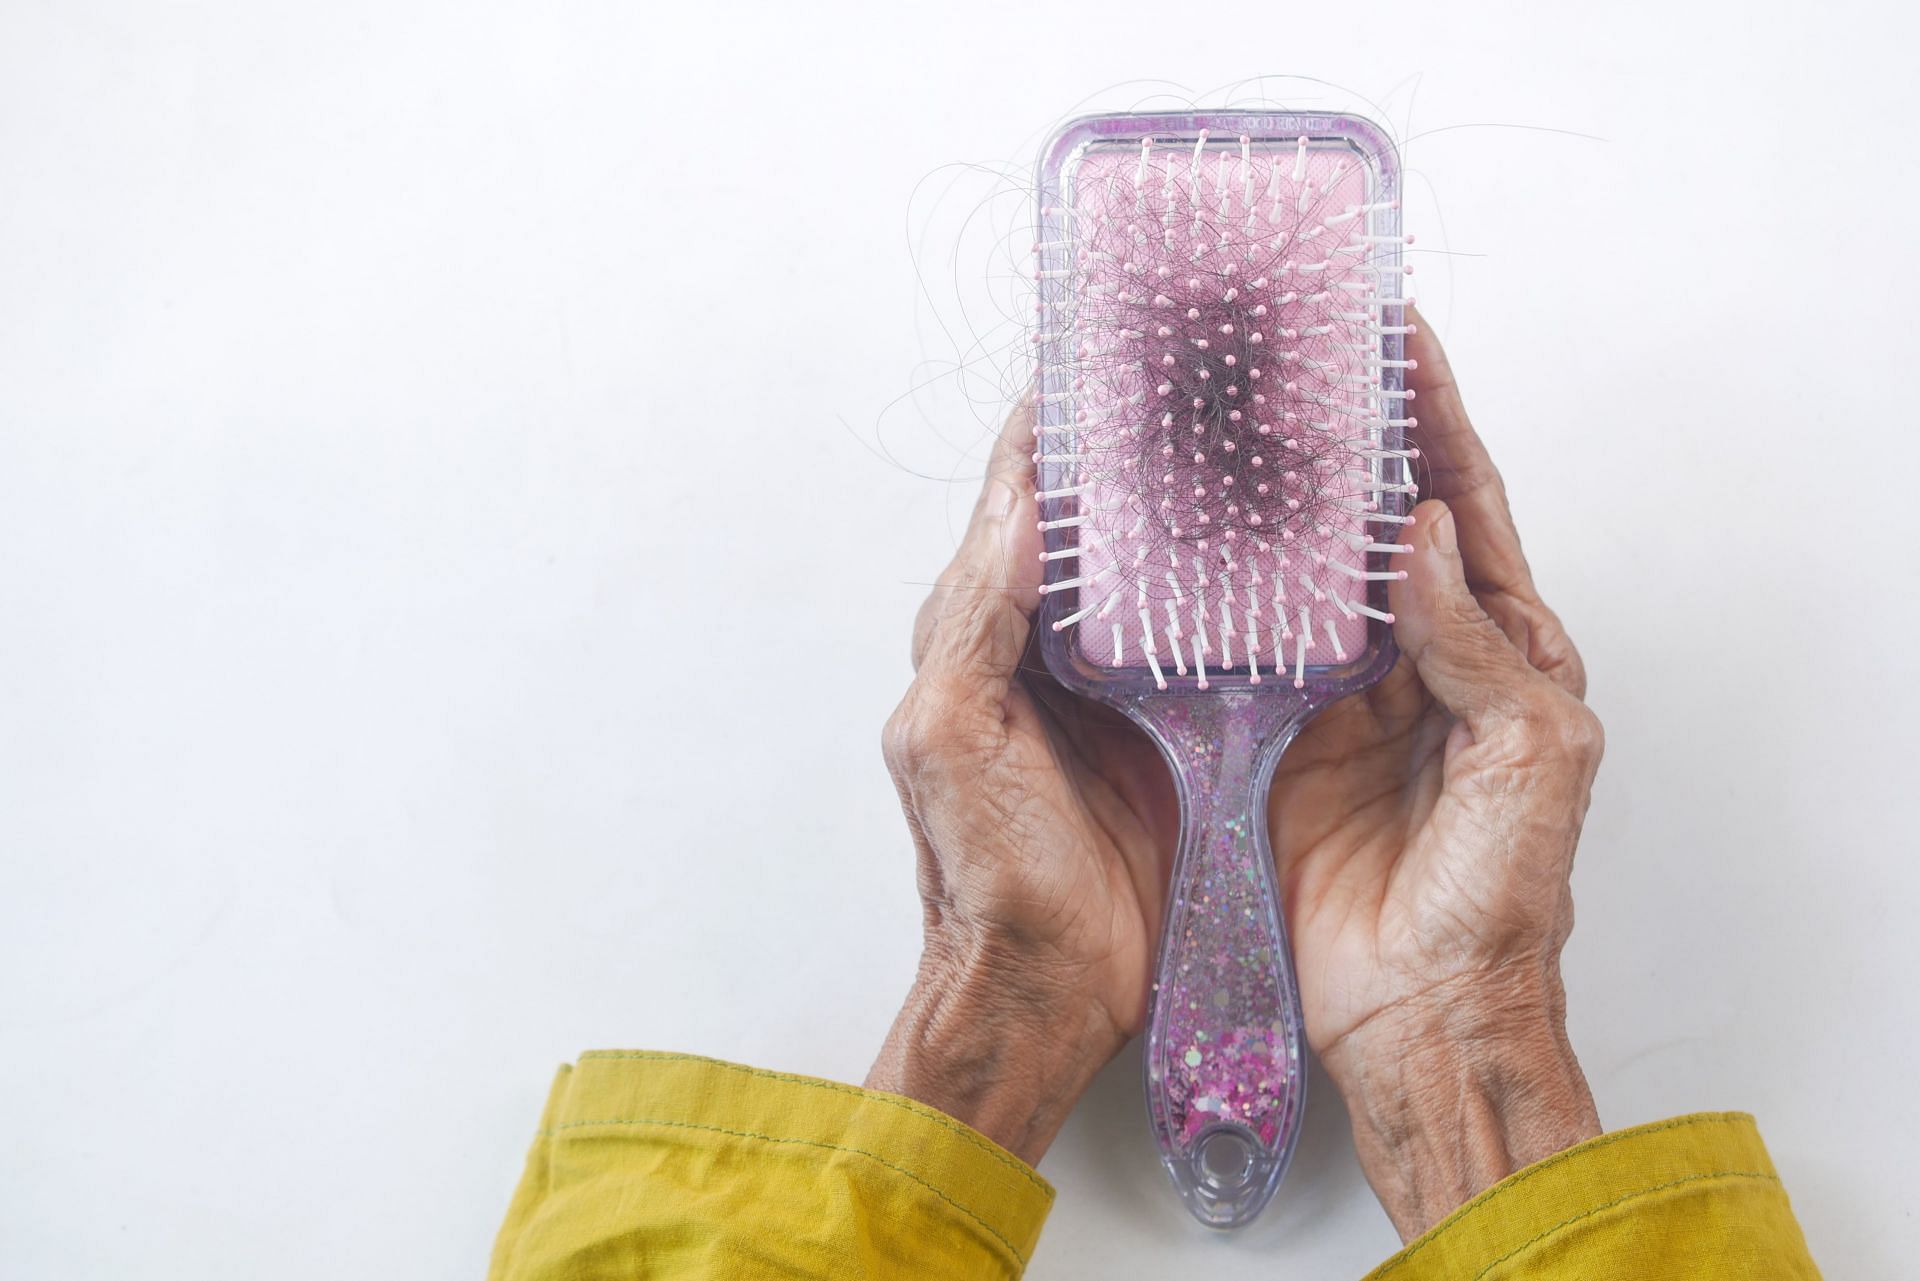 Microneedling for hair loss can help stimulate collagen for hair growth. (Image via Unsplash / Towfiqu Barbhuiya)